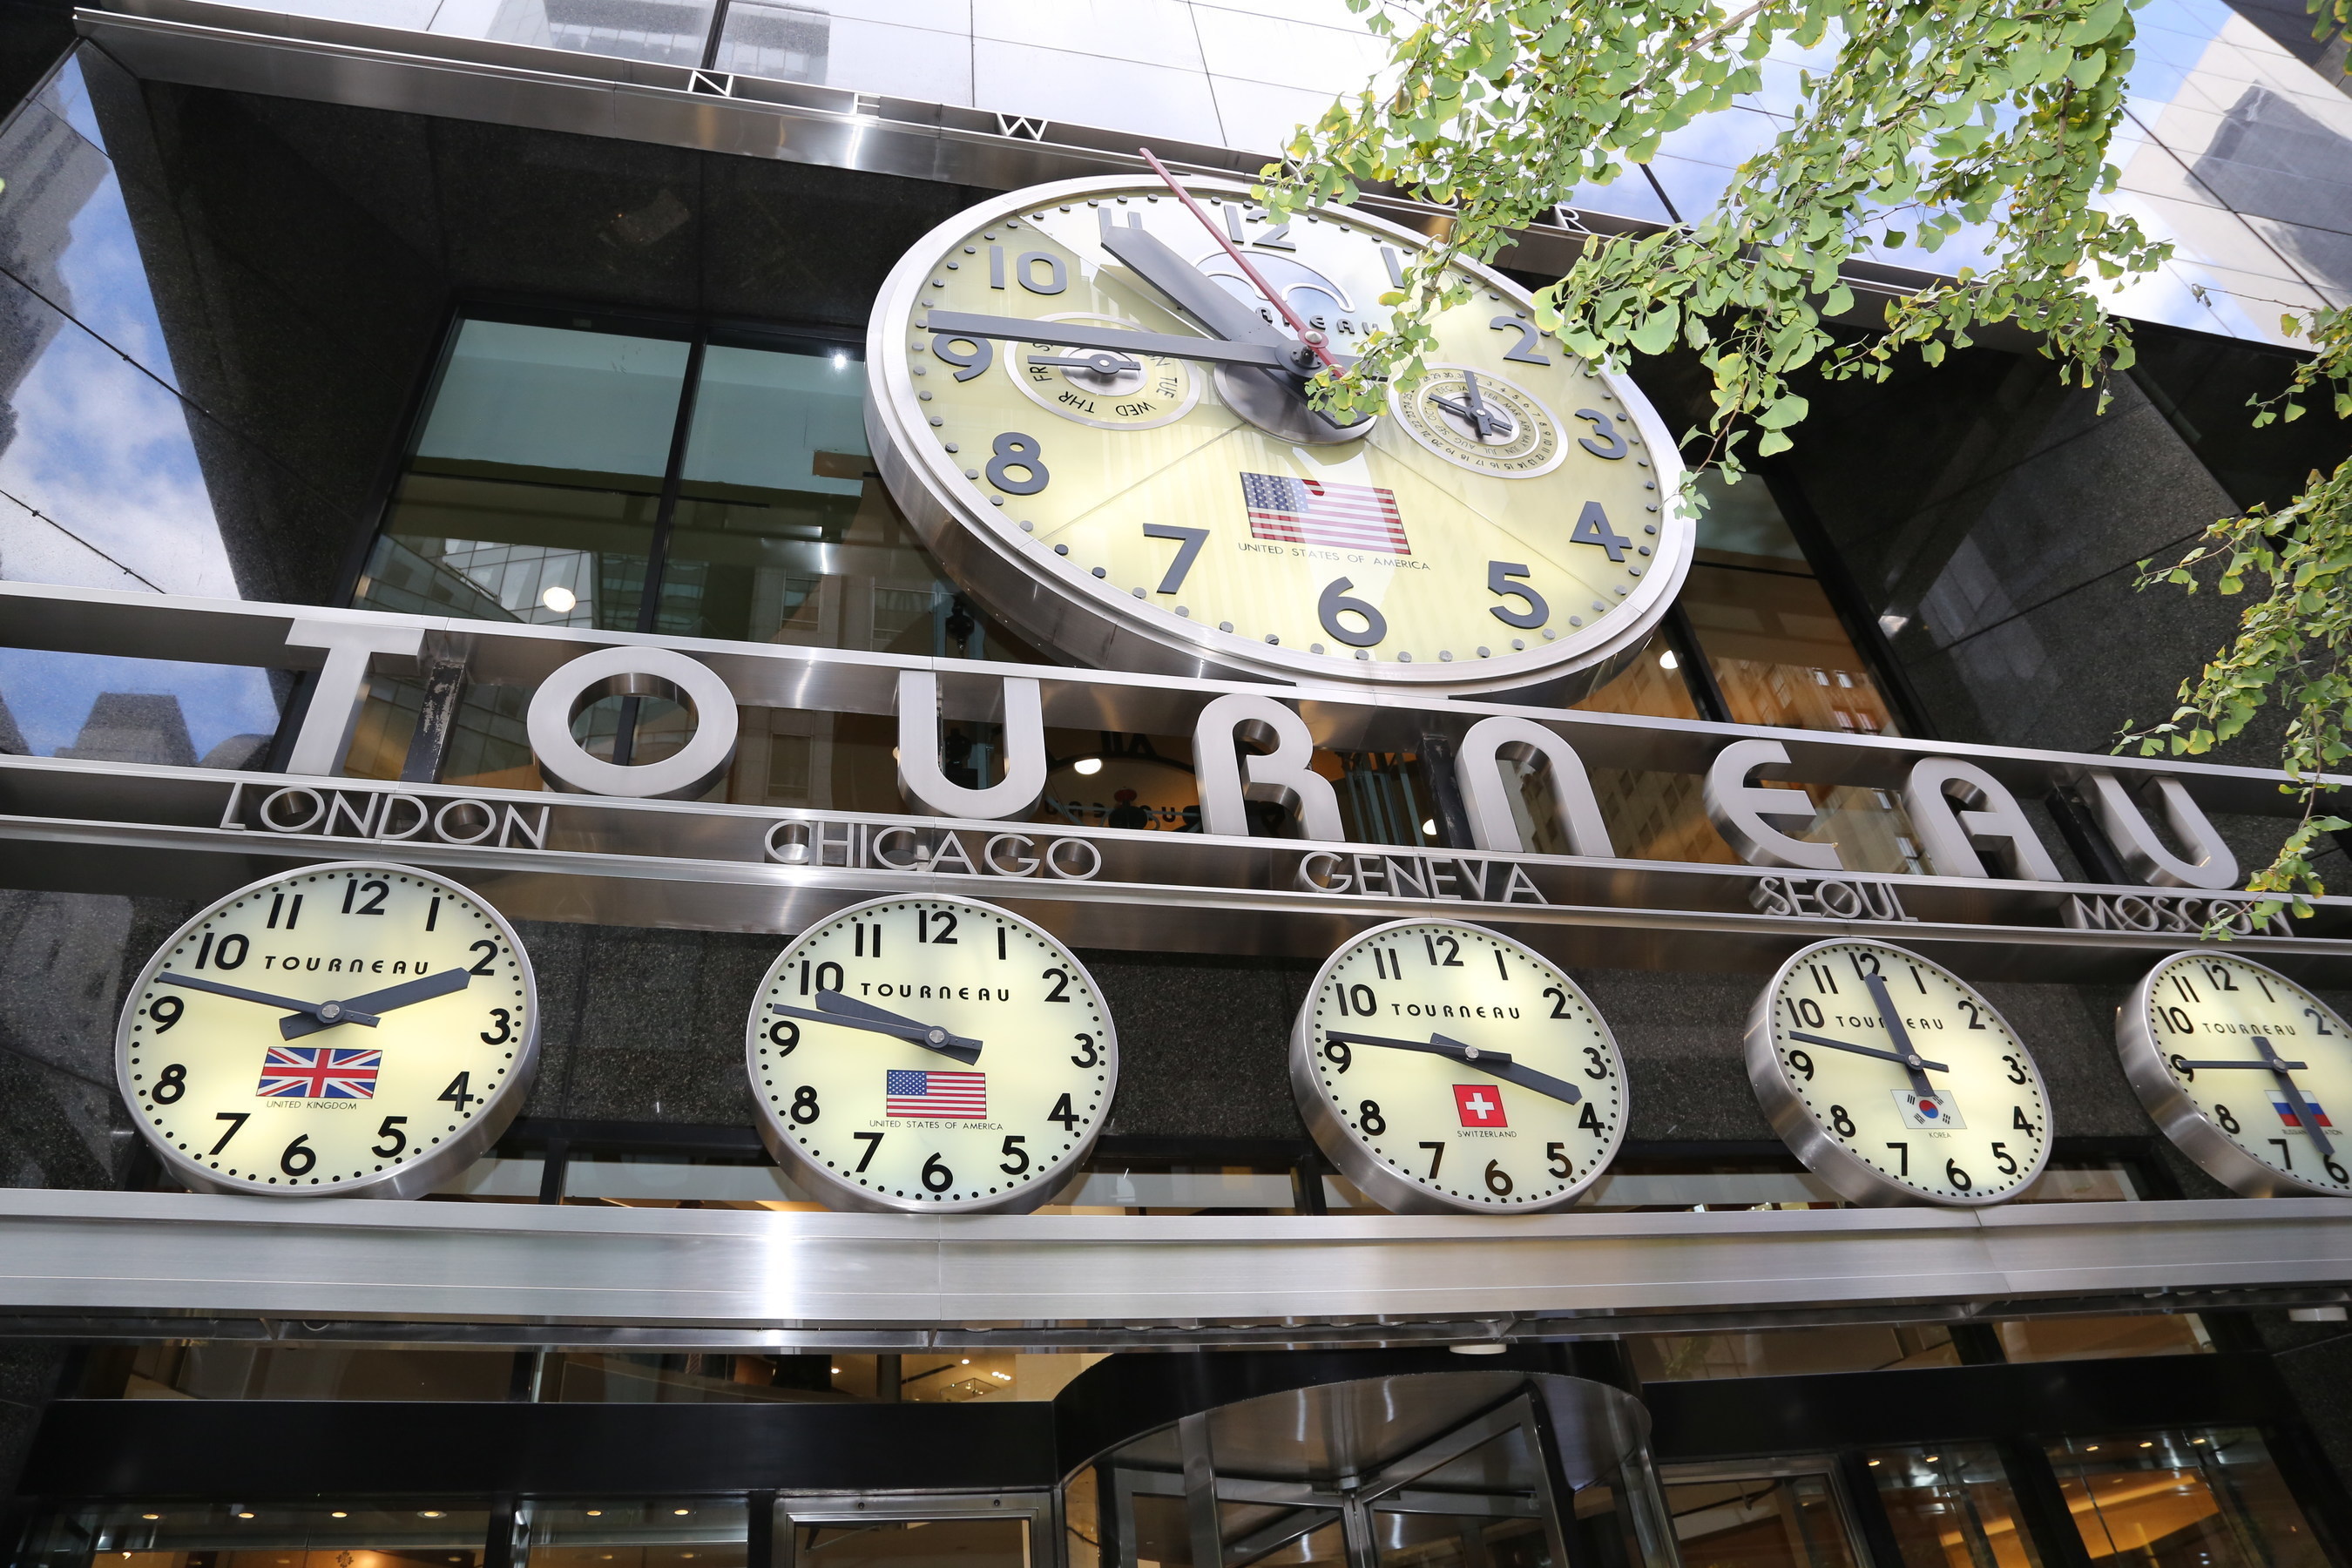 Tourneau Turns Back the Clocks for Daylight Saving Time